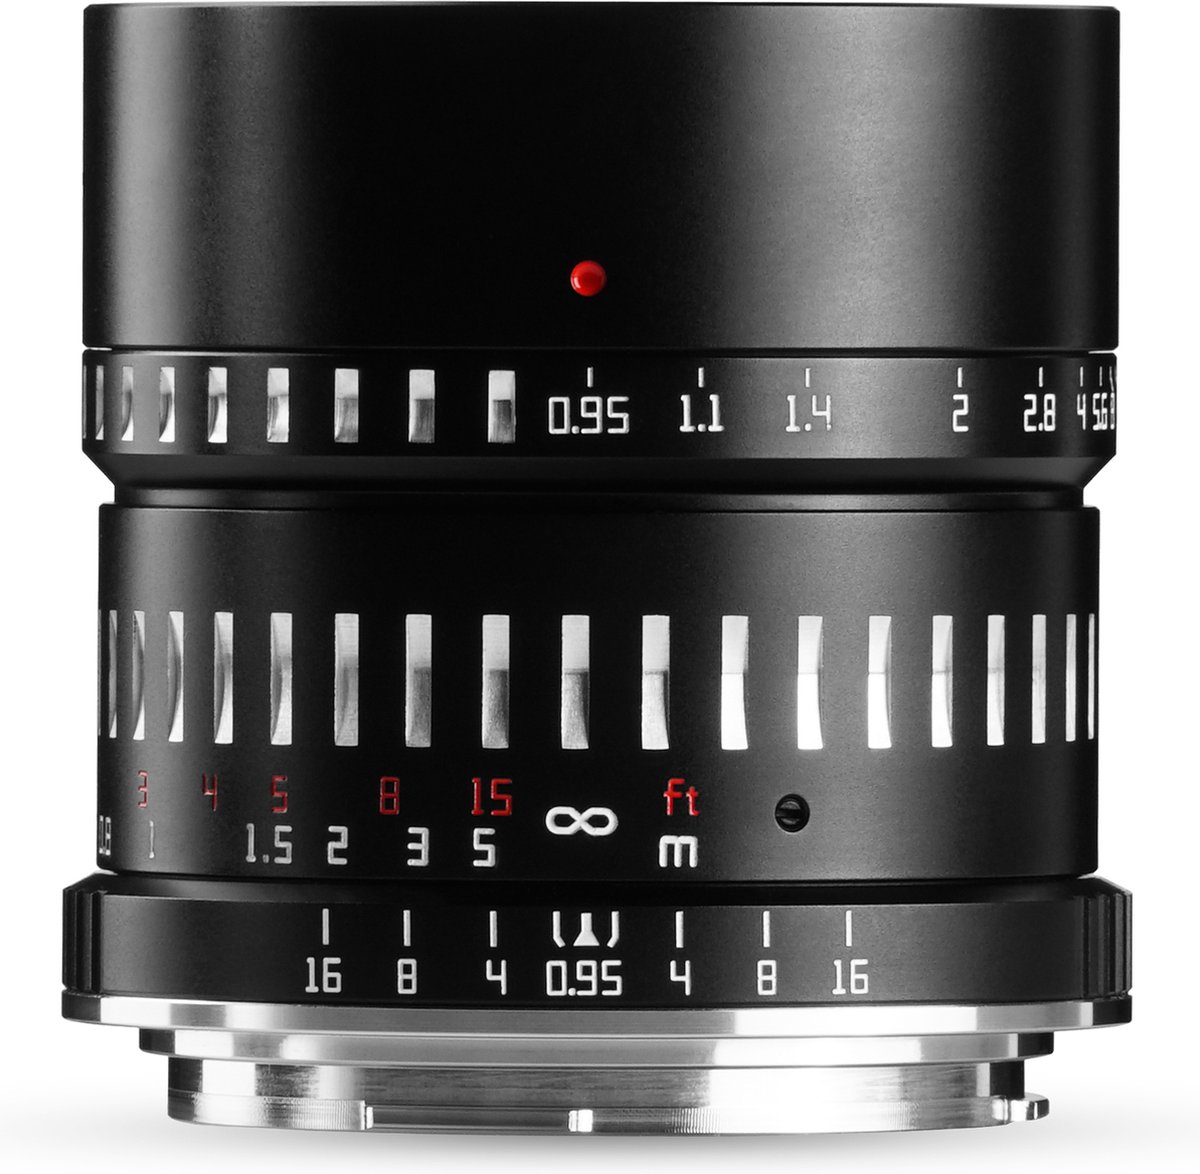 TT Artisan - Cameralens - 50mm F/0.95 APS-C for Nikon Z-mount, black + silver